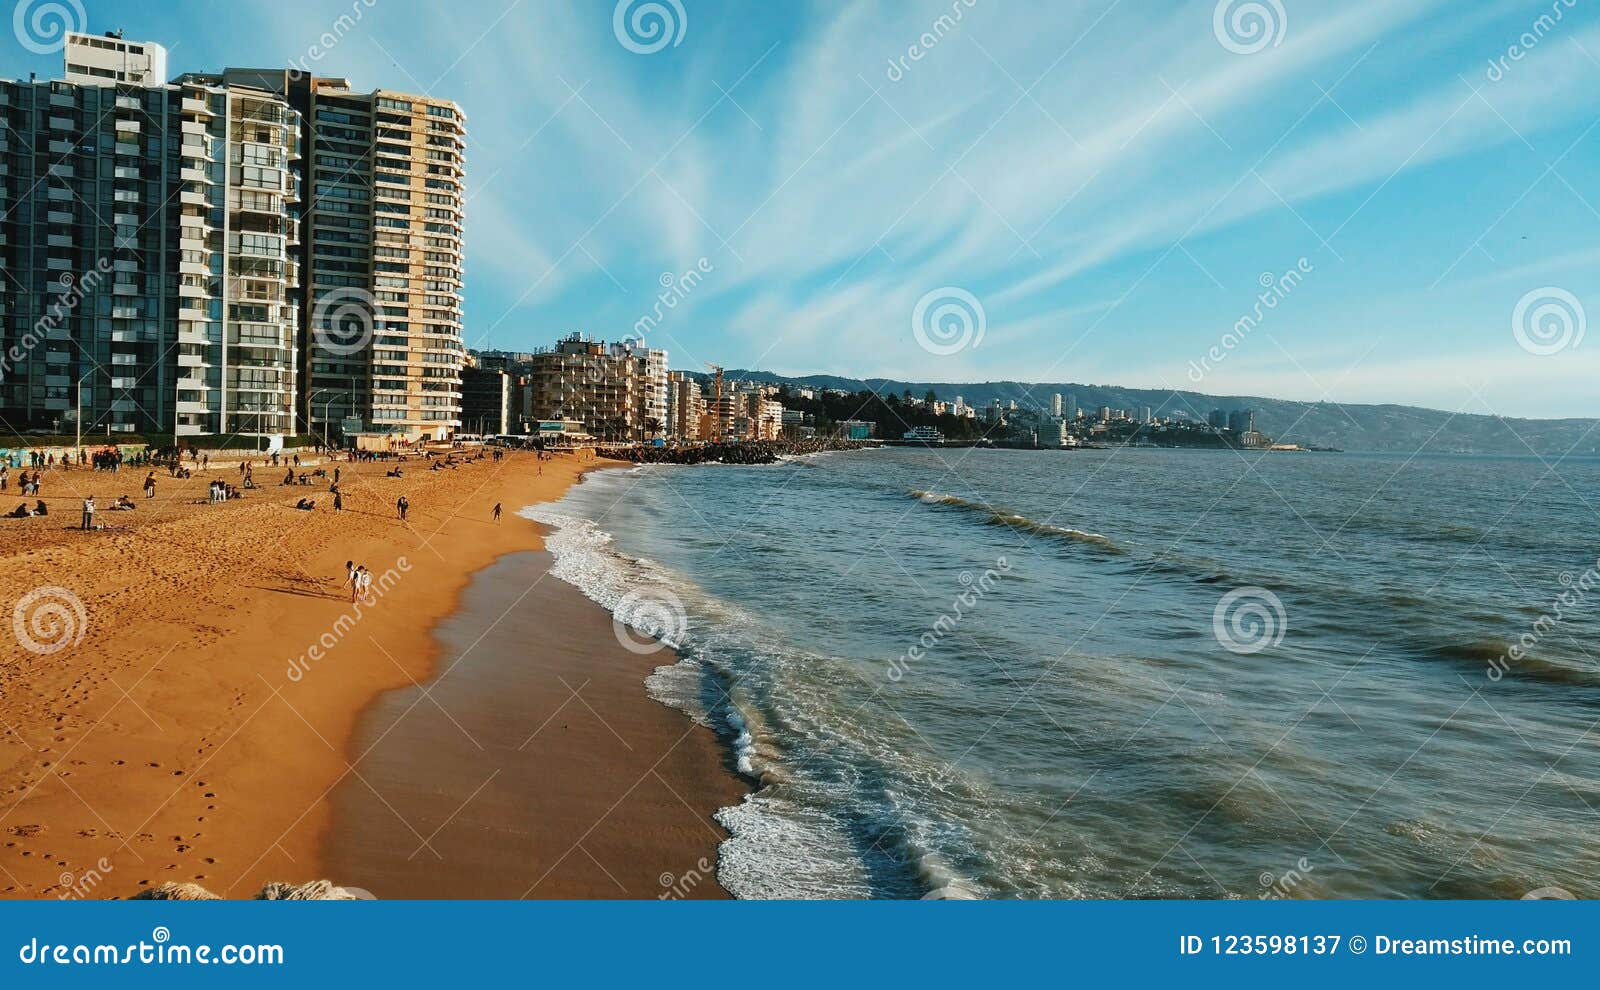 sunny day at acapulco`s beach